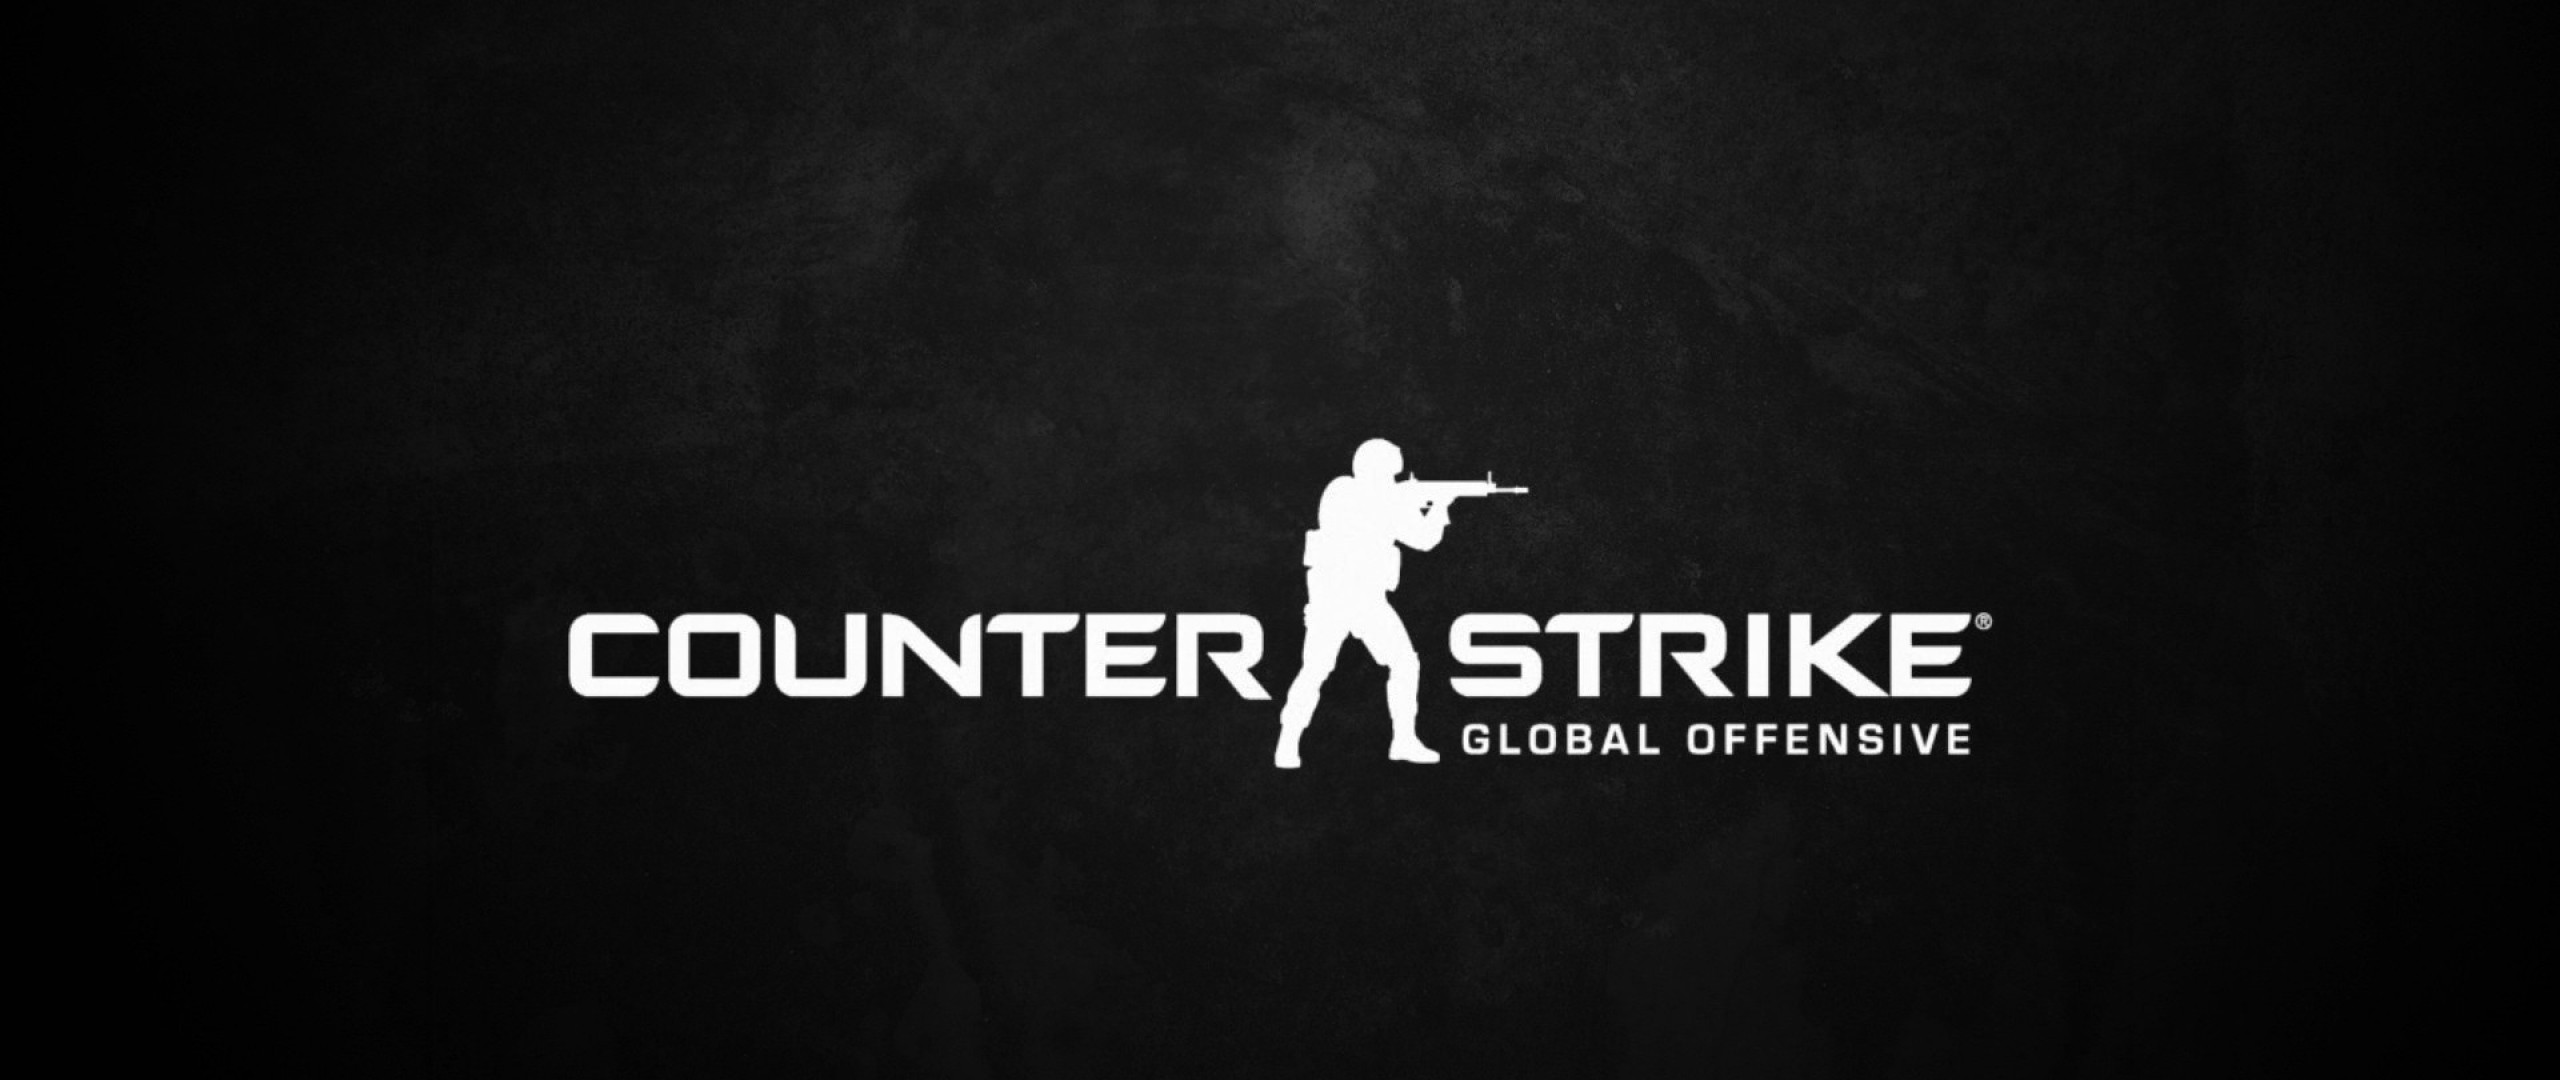 2560x1080  Wallpaper counter-strike global offensive, soldier, graphics,  background, gun